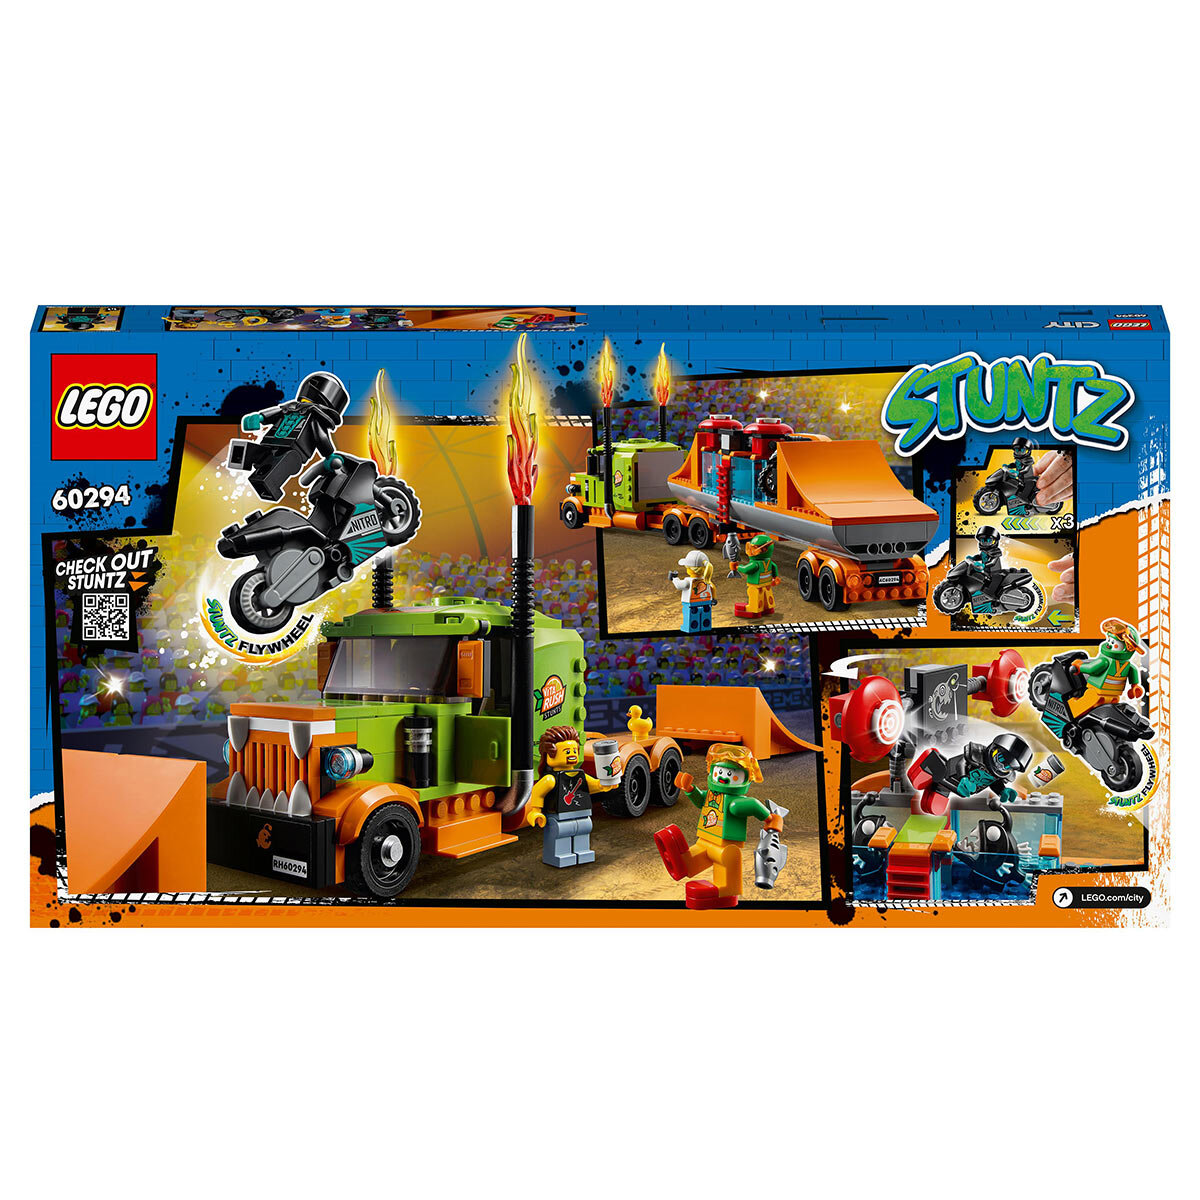 Buy LEGO City Stunt Truck Back of Box Image at Costco.co.uk